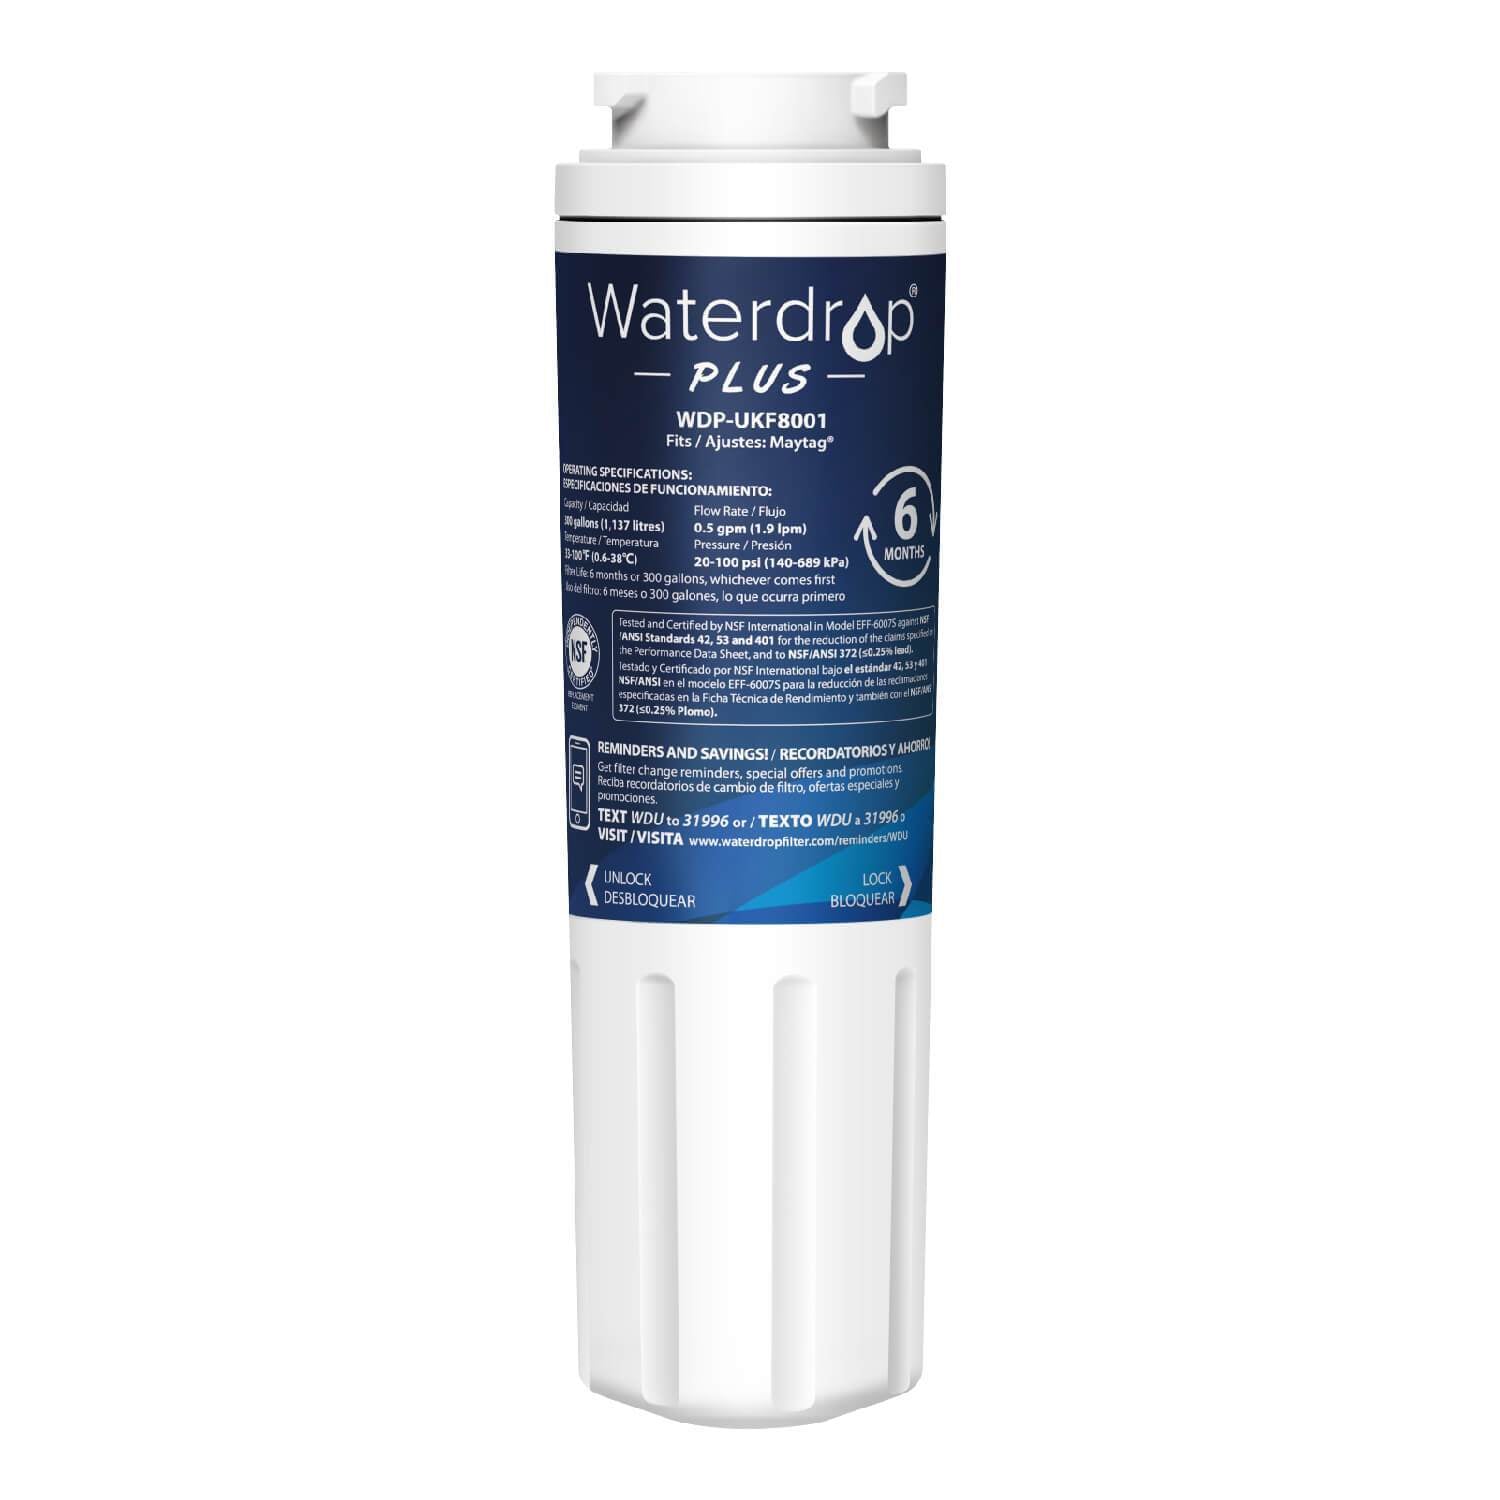 Waterdrop Replacement for Maytag Fridge Water FilterUKF8001